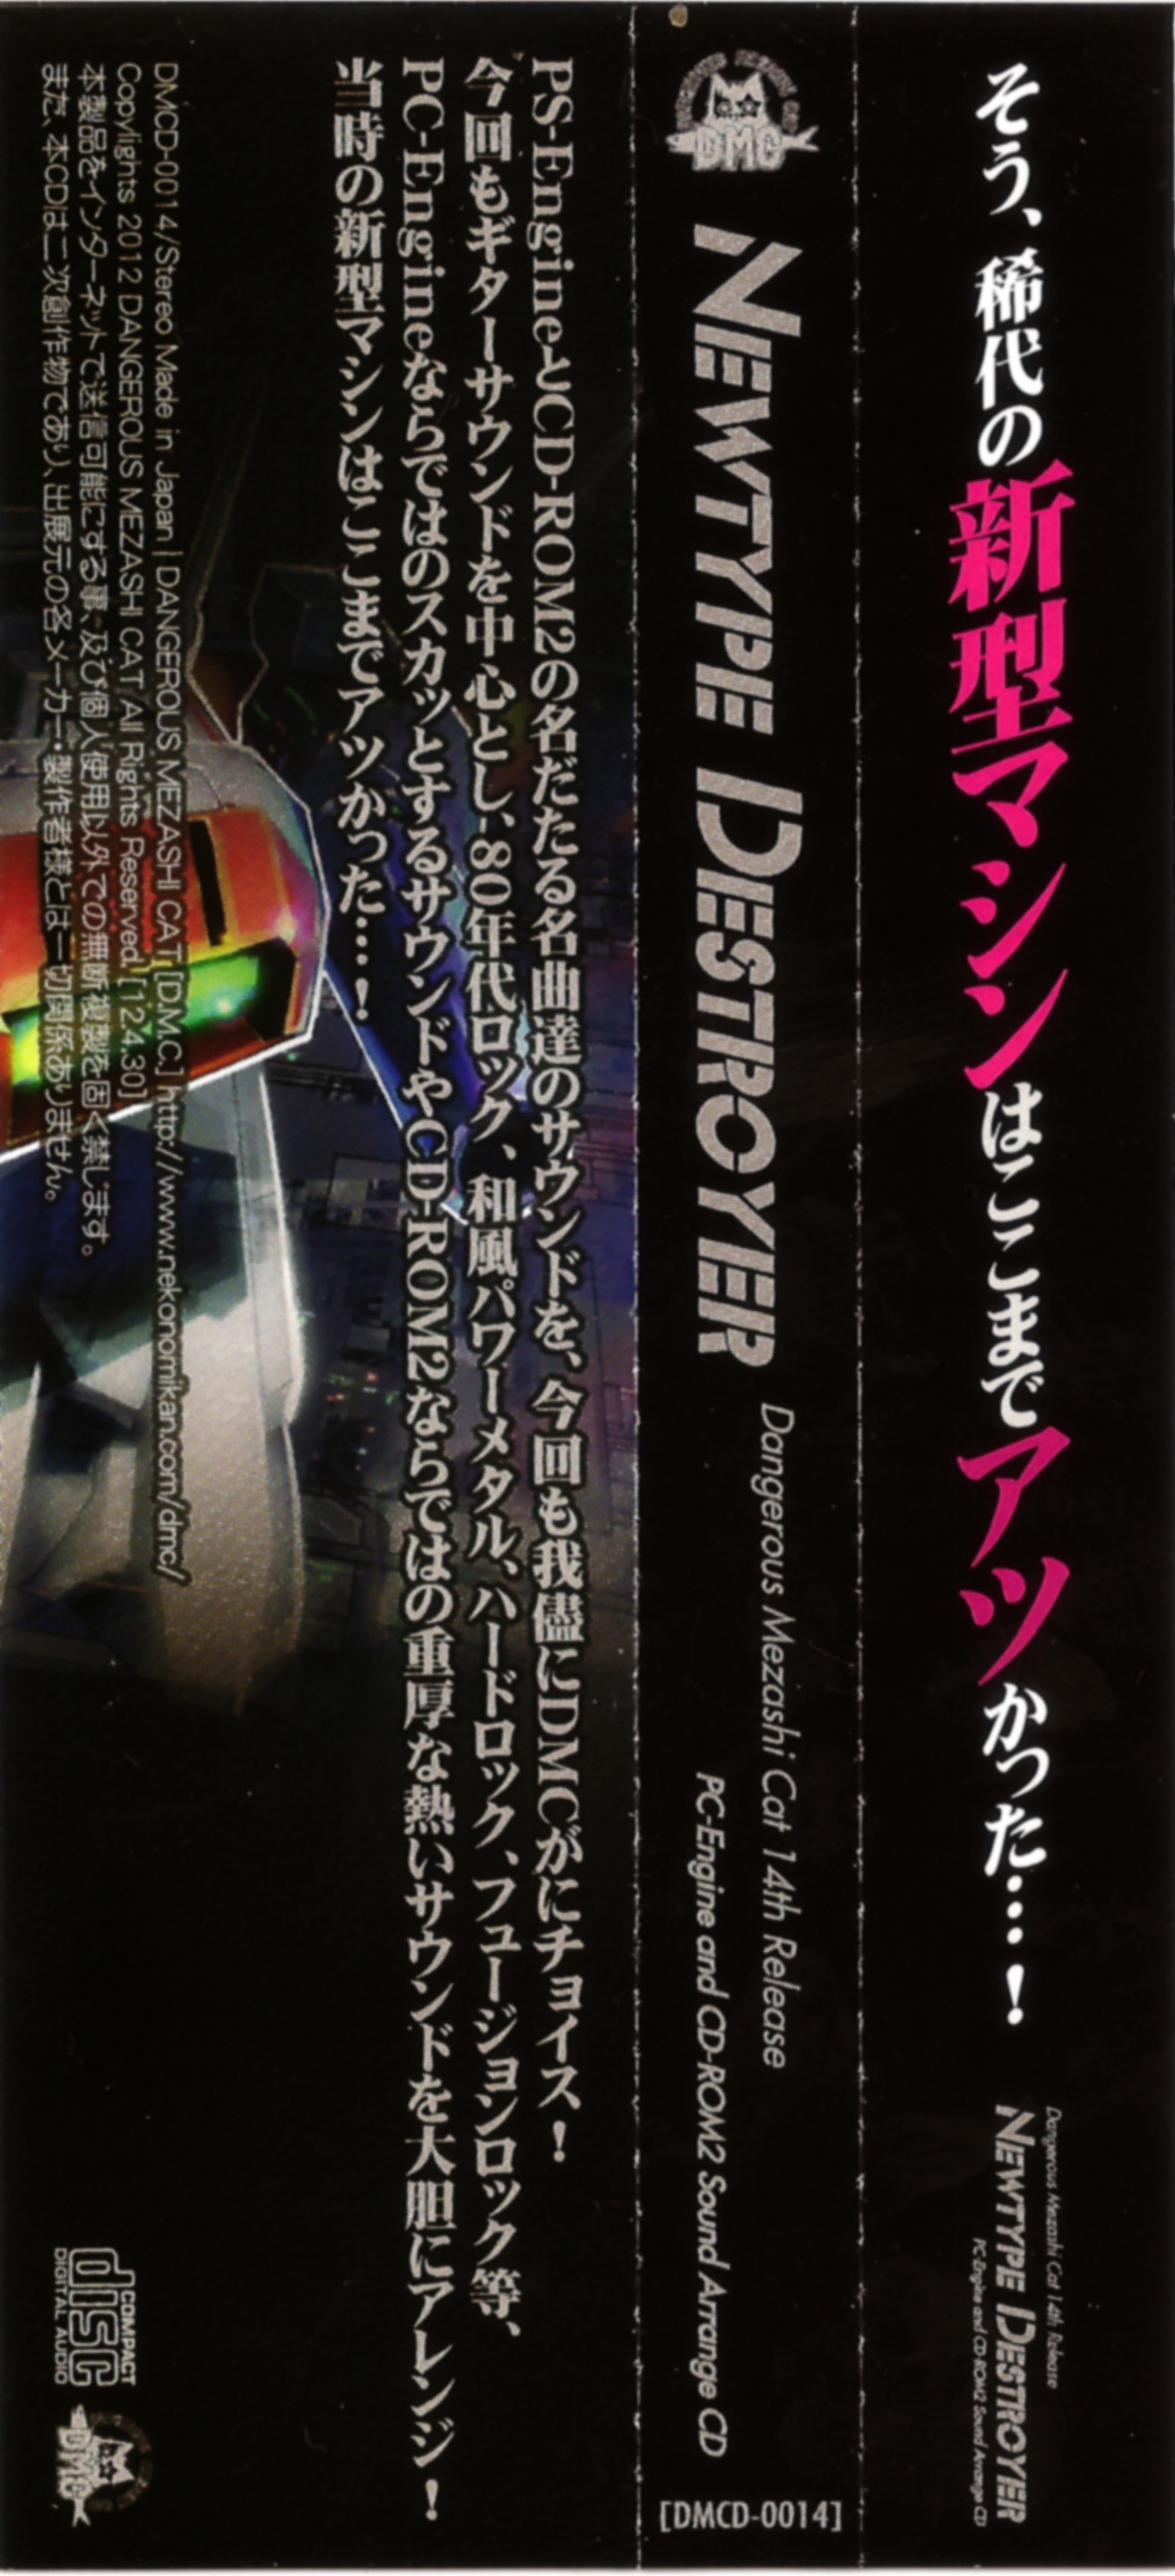 Newtype Destroyer (2012) MP3 - Download Newtype Destroyer (2012)  Soundtracks for FREE!